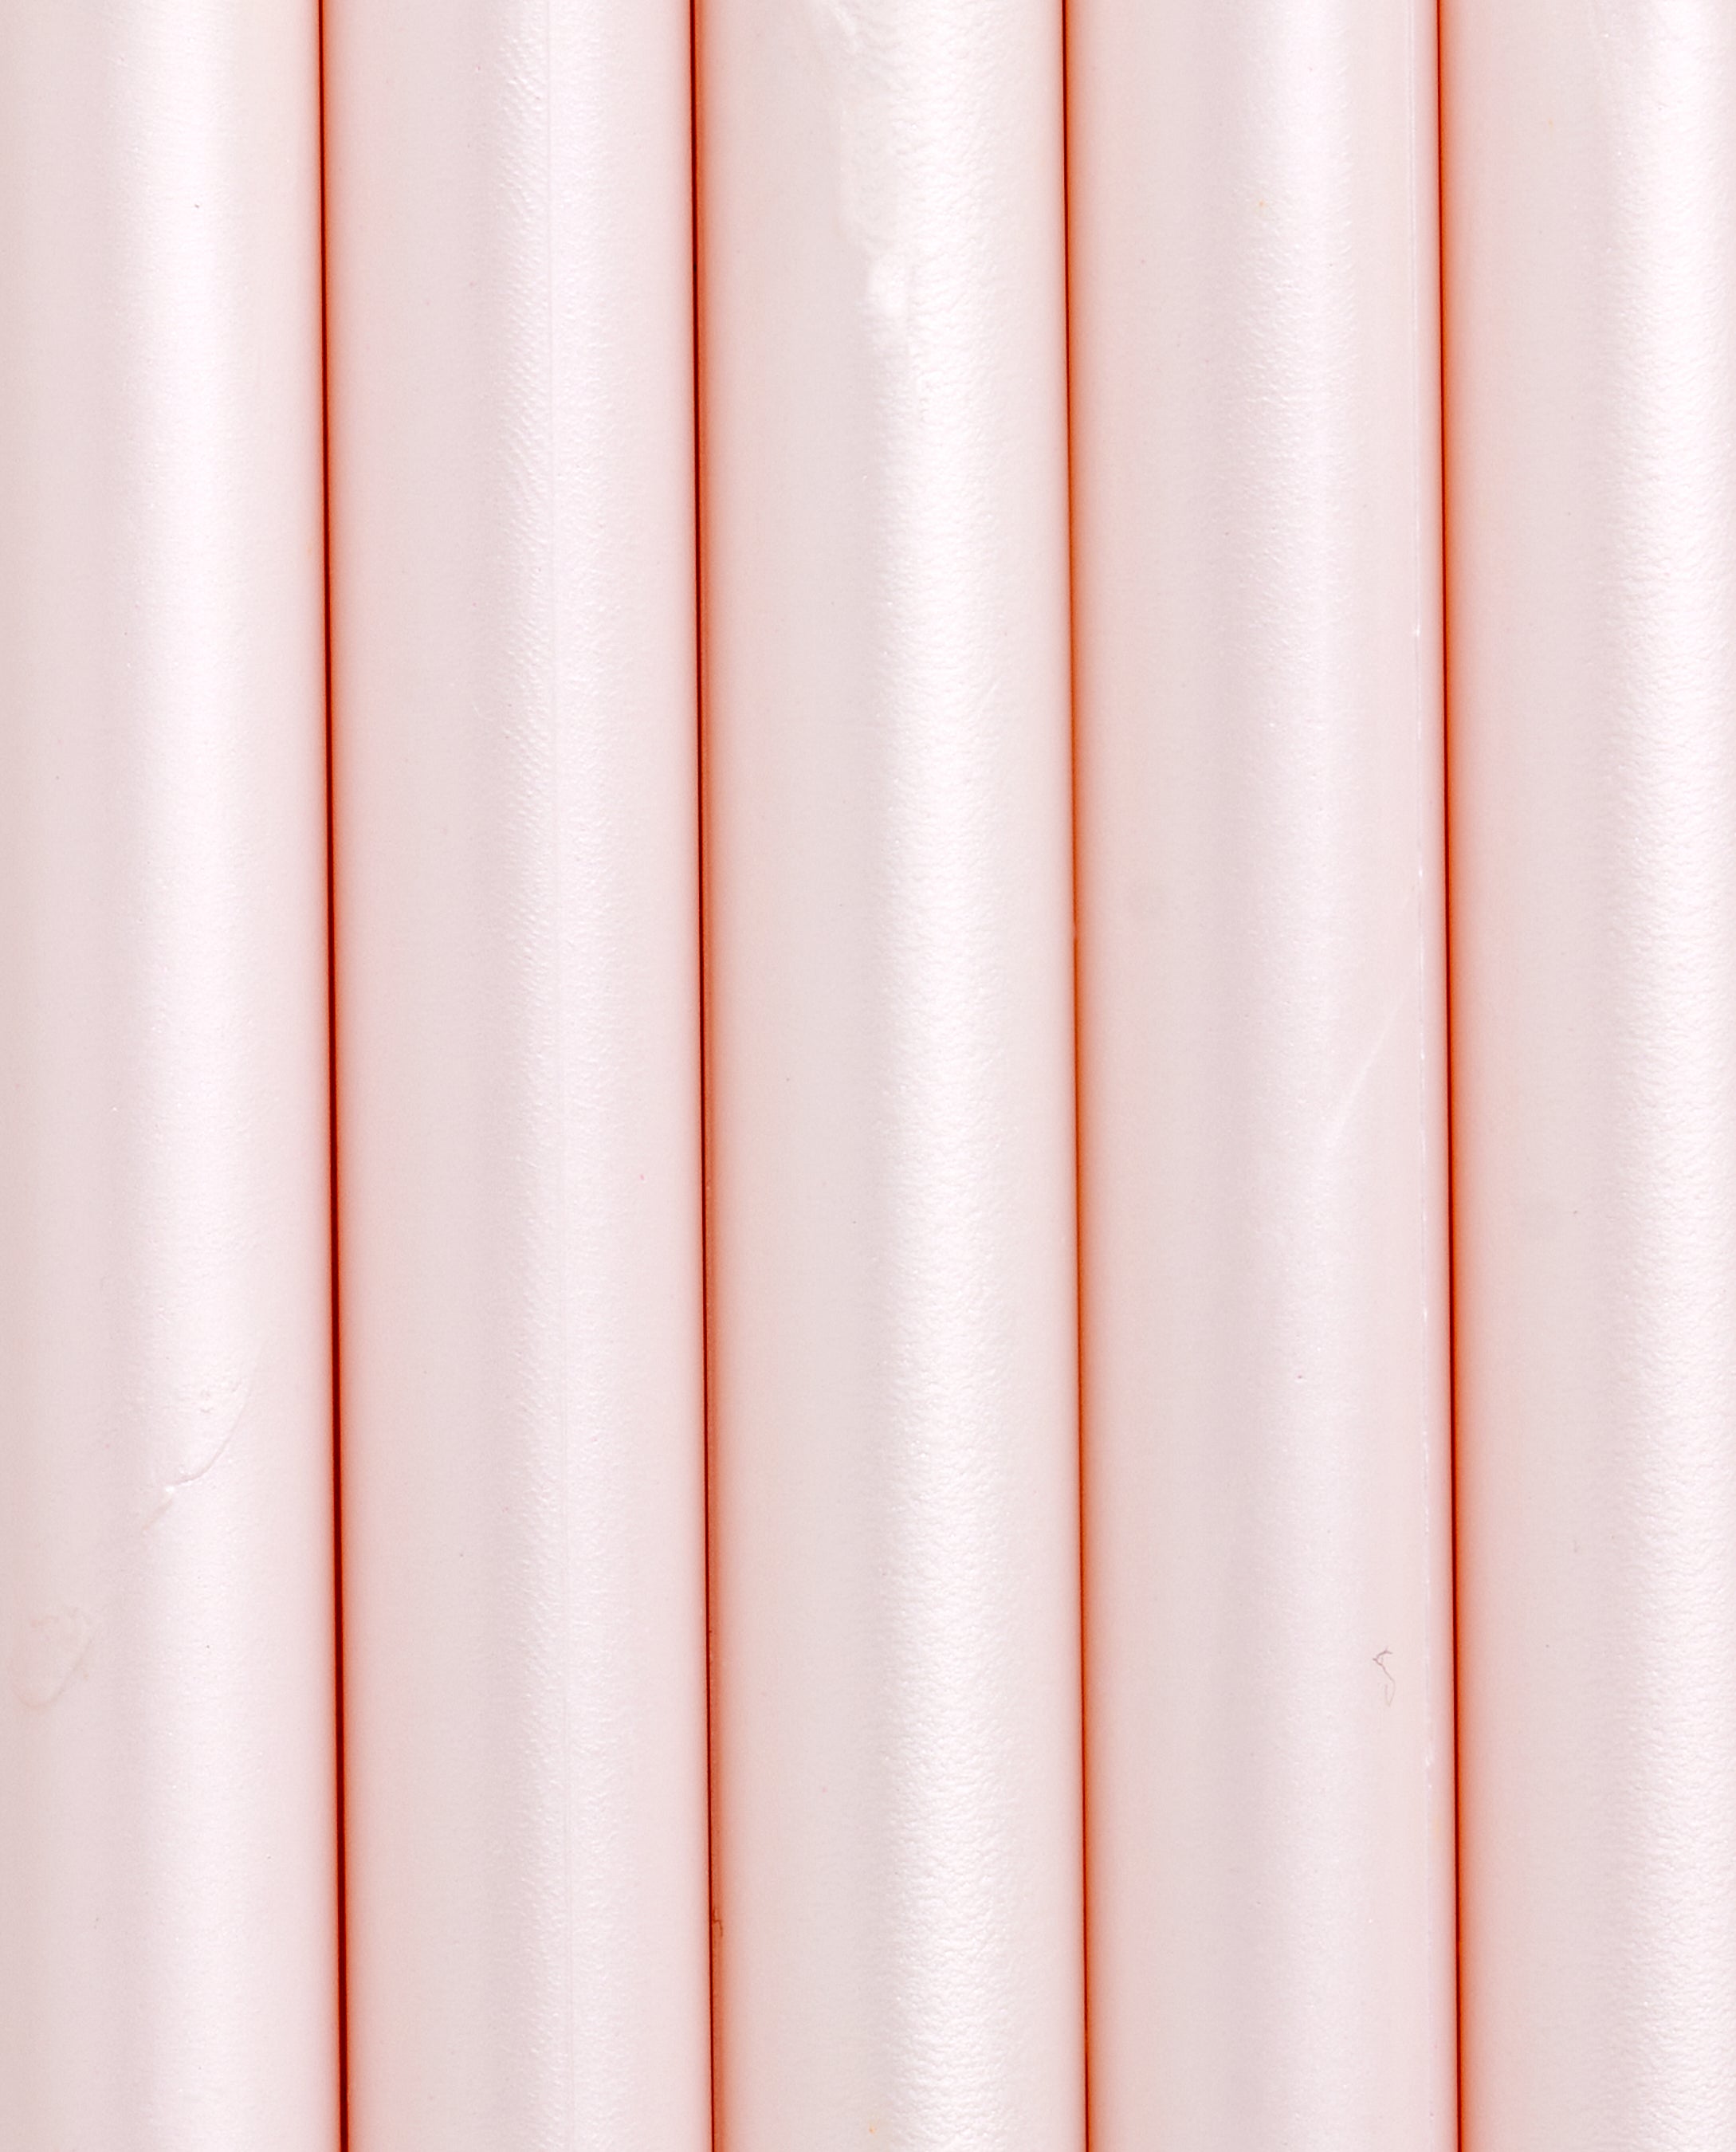 Pale Pink Wax Stick (Pearl)